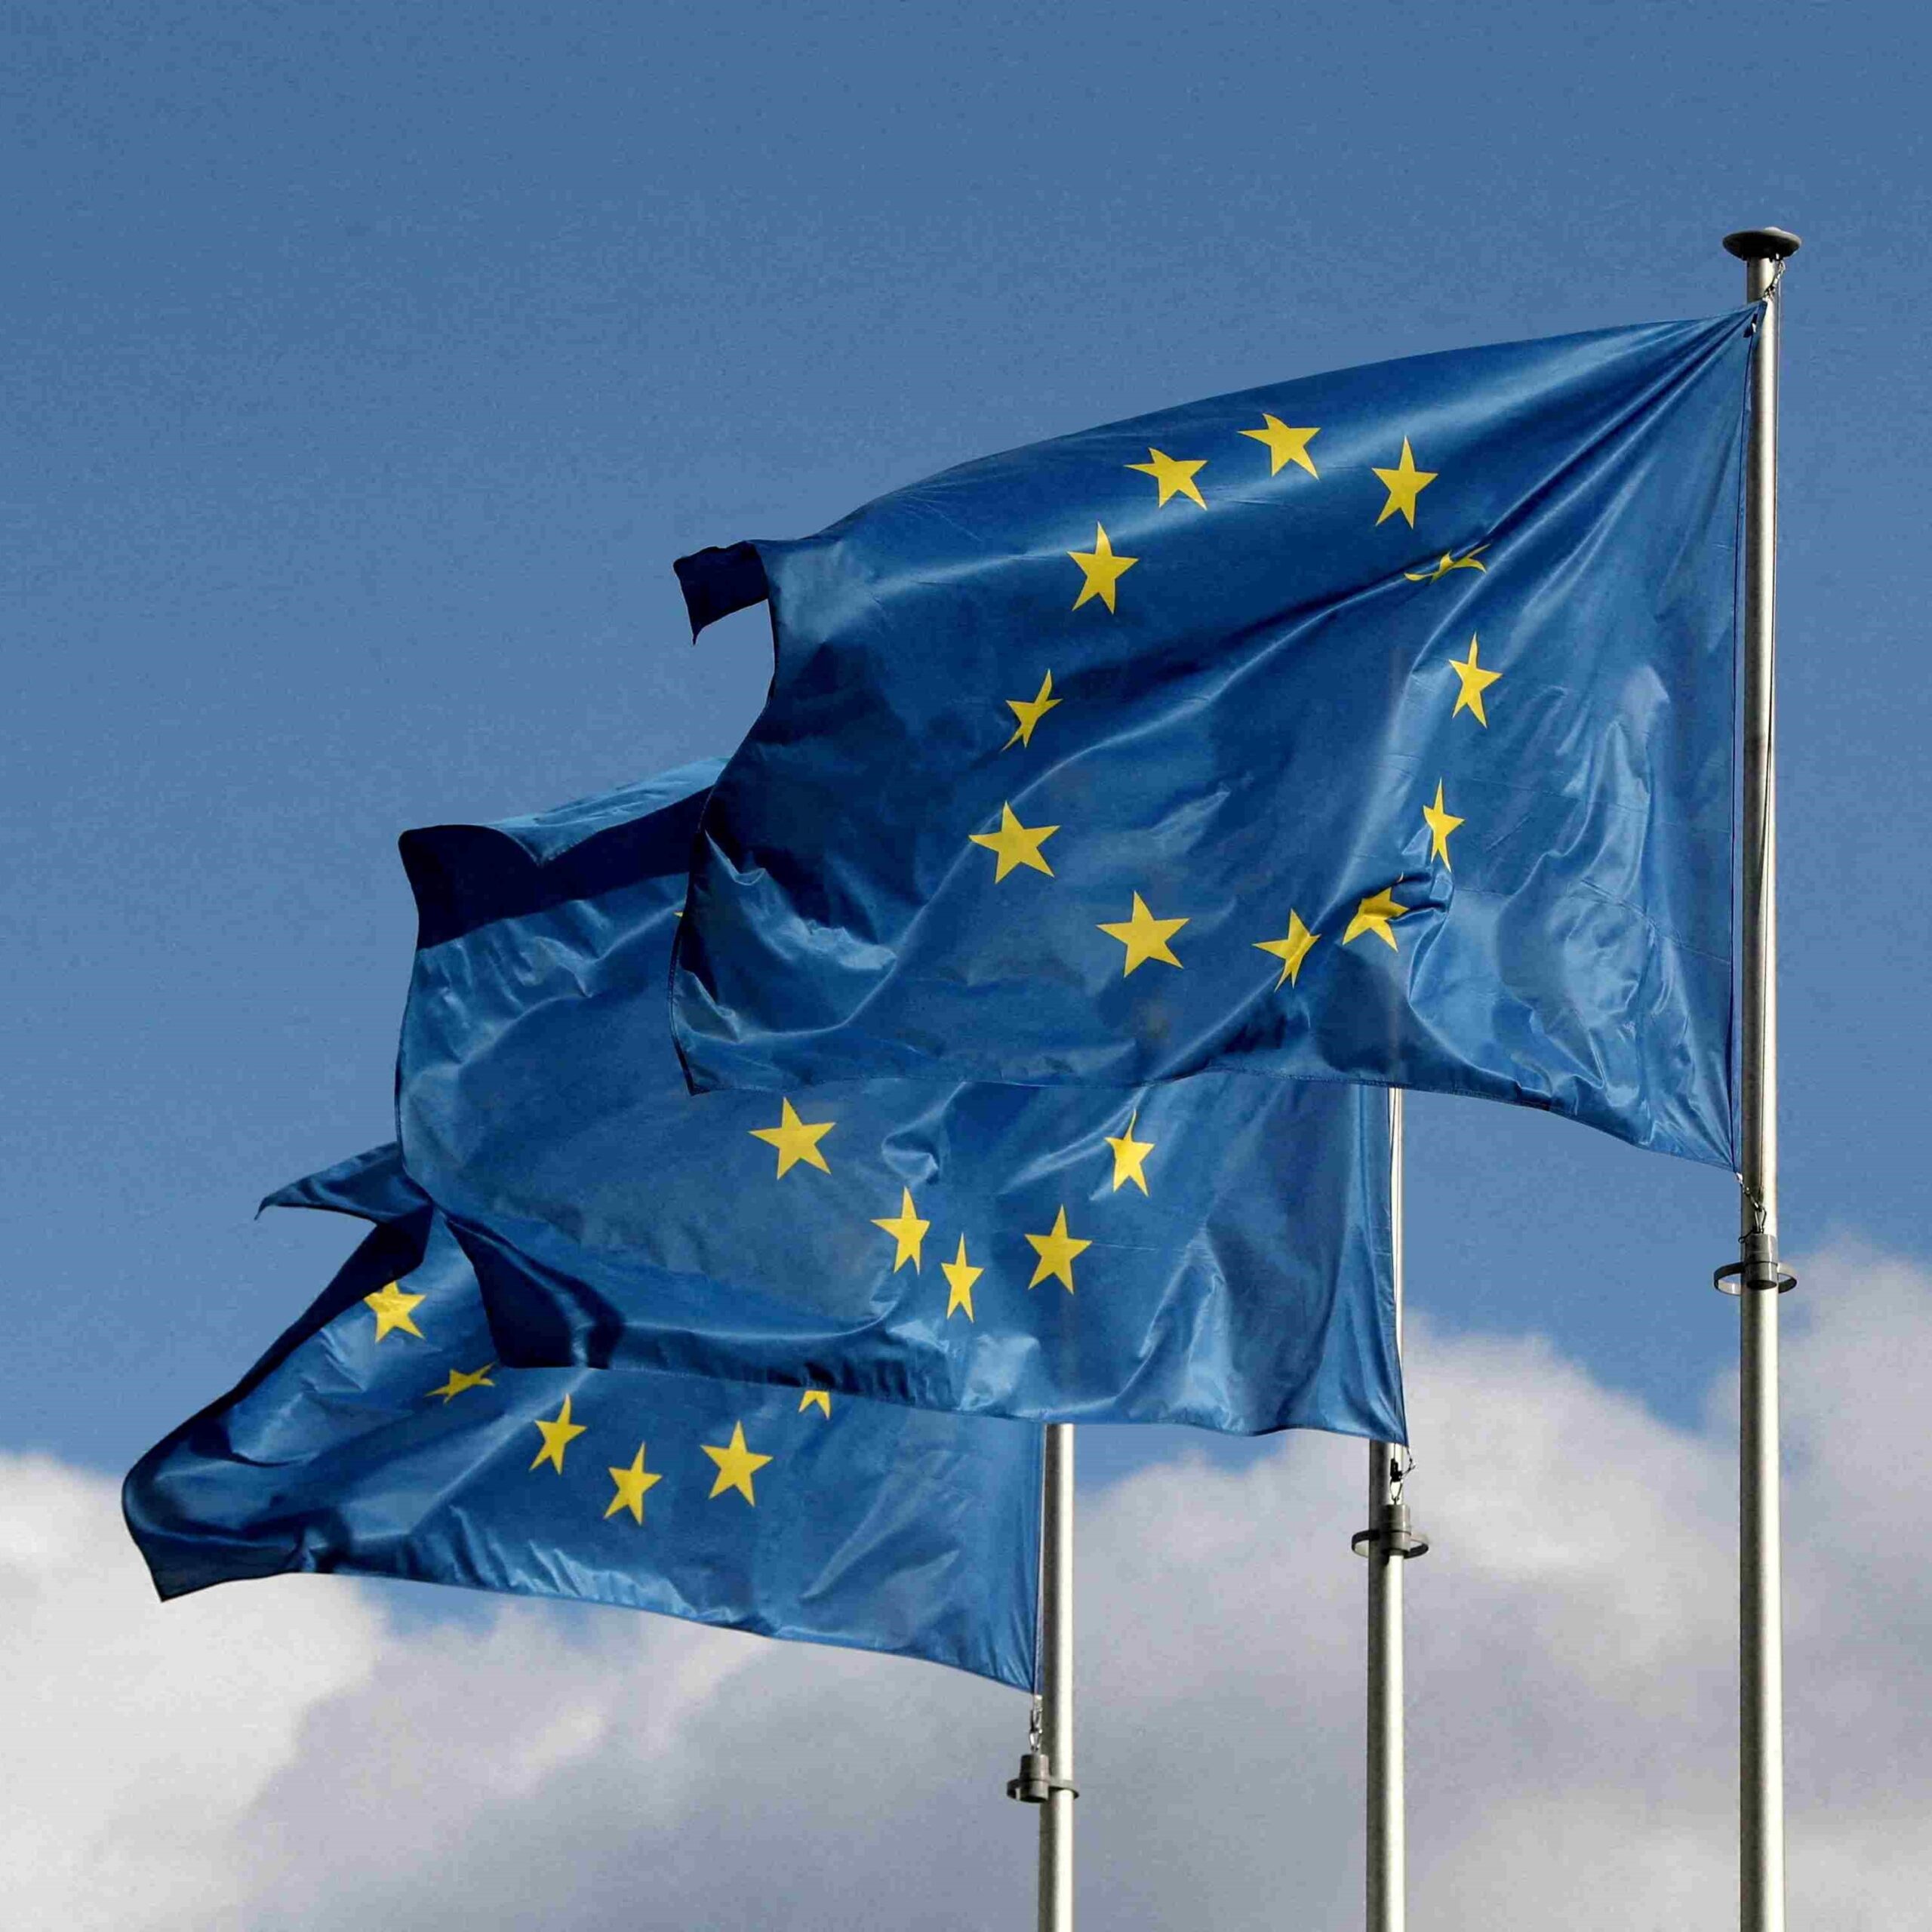 Edwards Lifesciences cooperating with EU antitrust regulators 